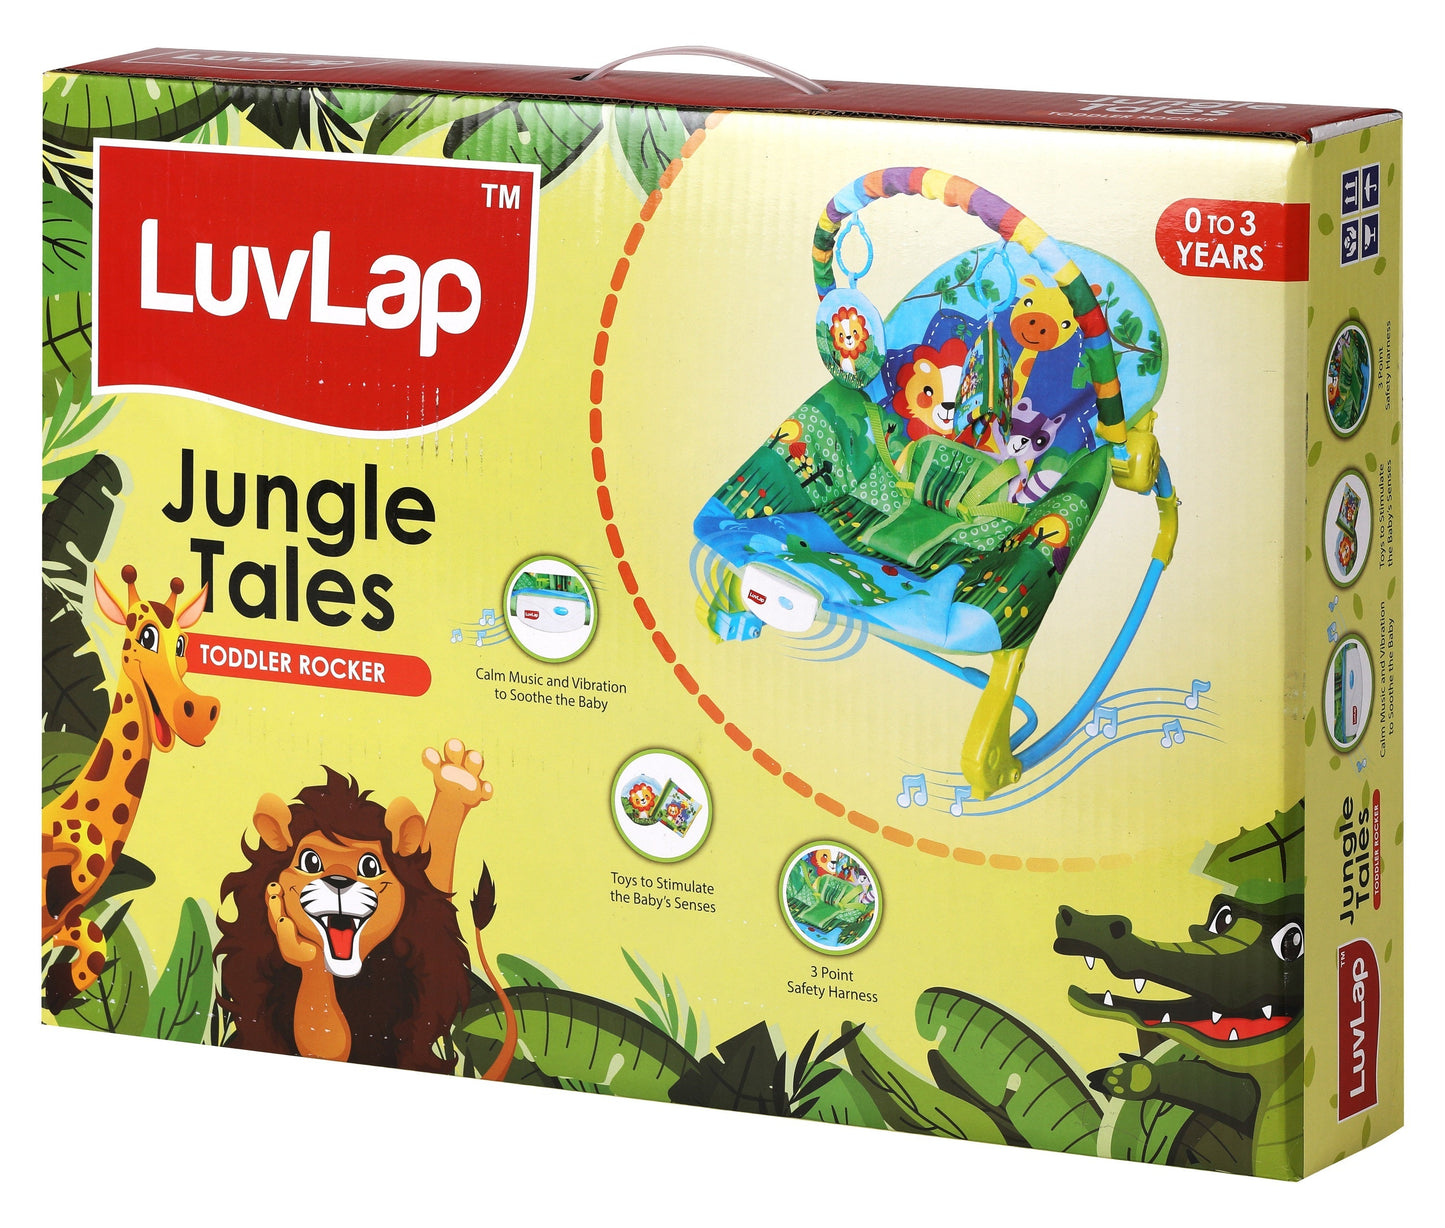 Jungle Tales Toddler Rocker